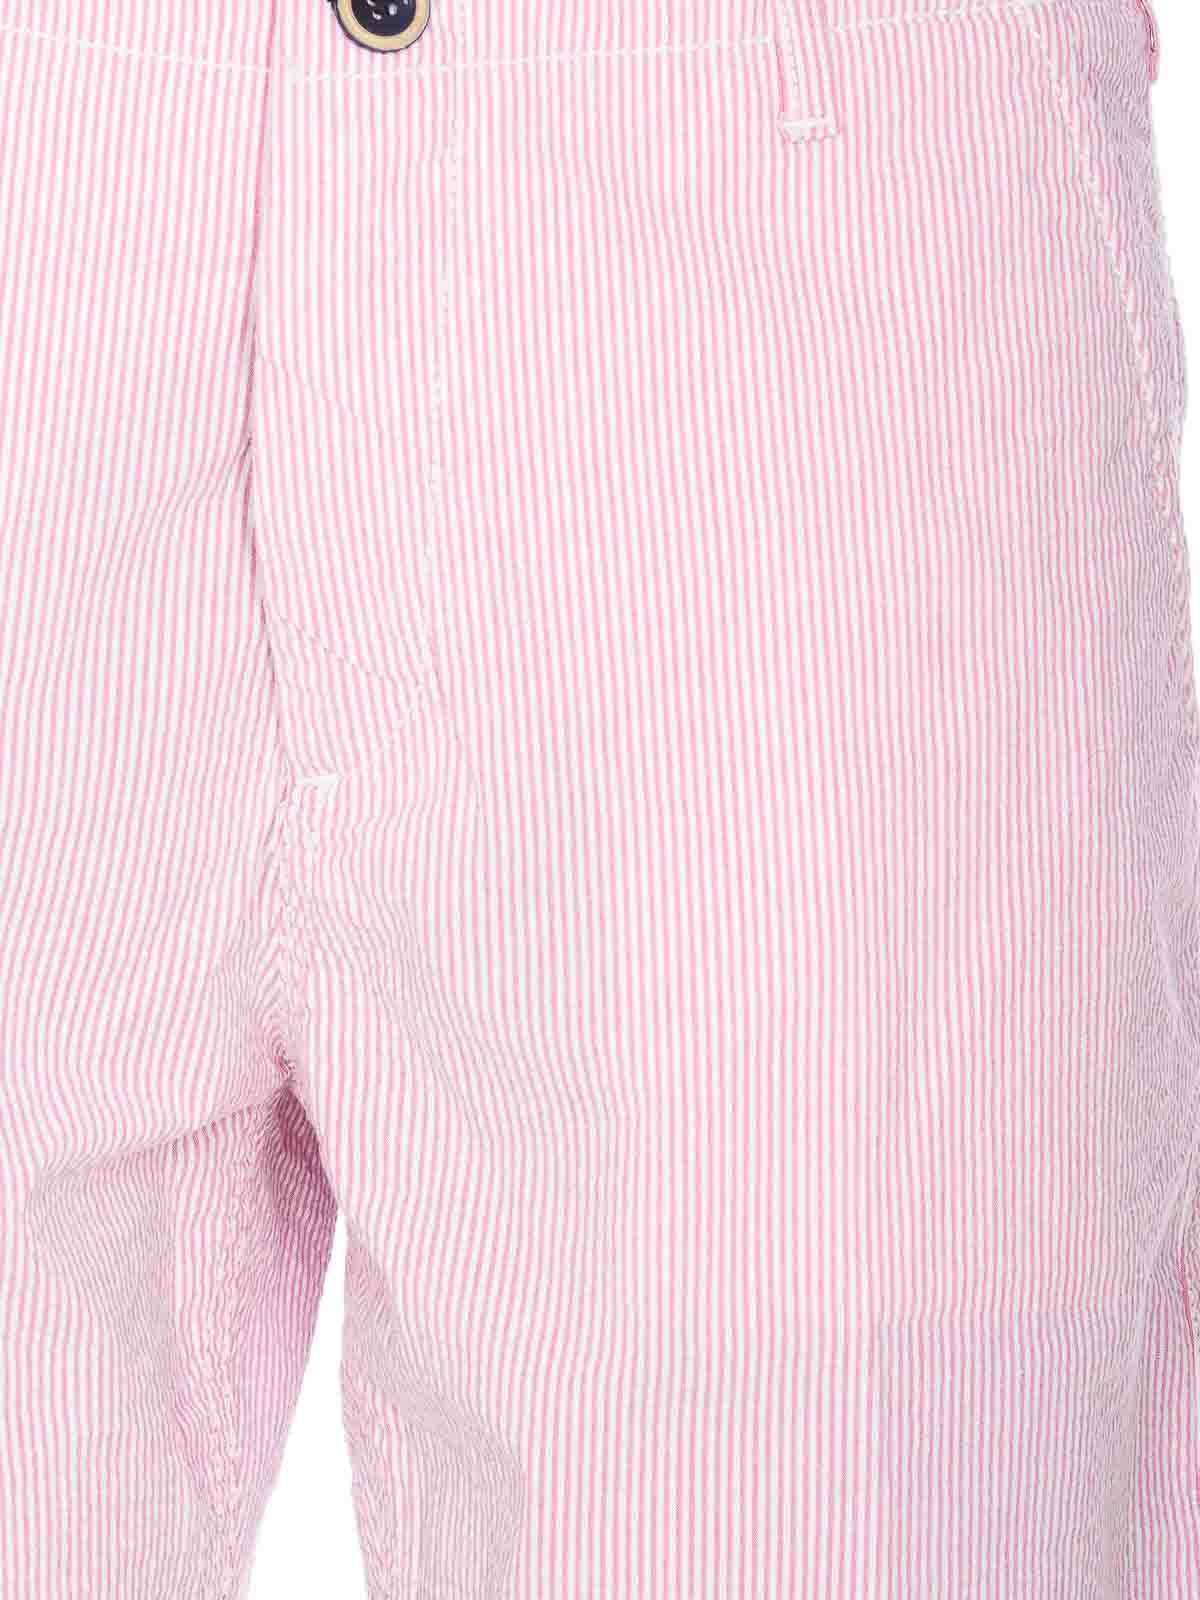 Shop Vilebrequin Pink White Striped Shorts Elasticized In Nude & Neutrals